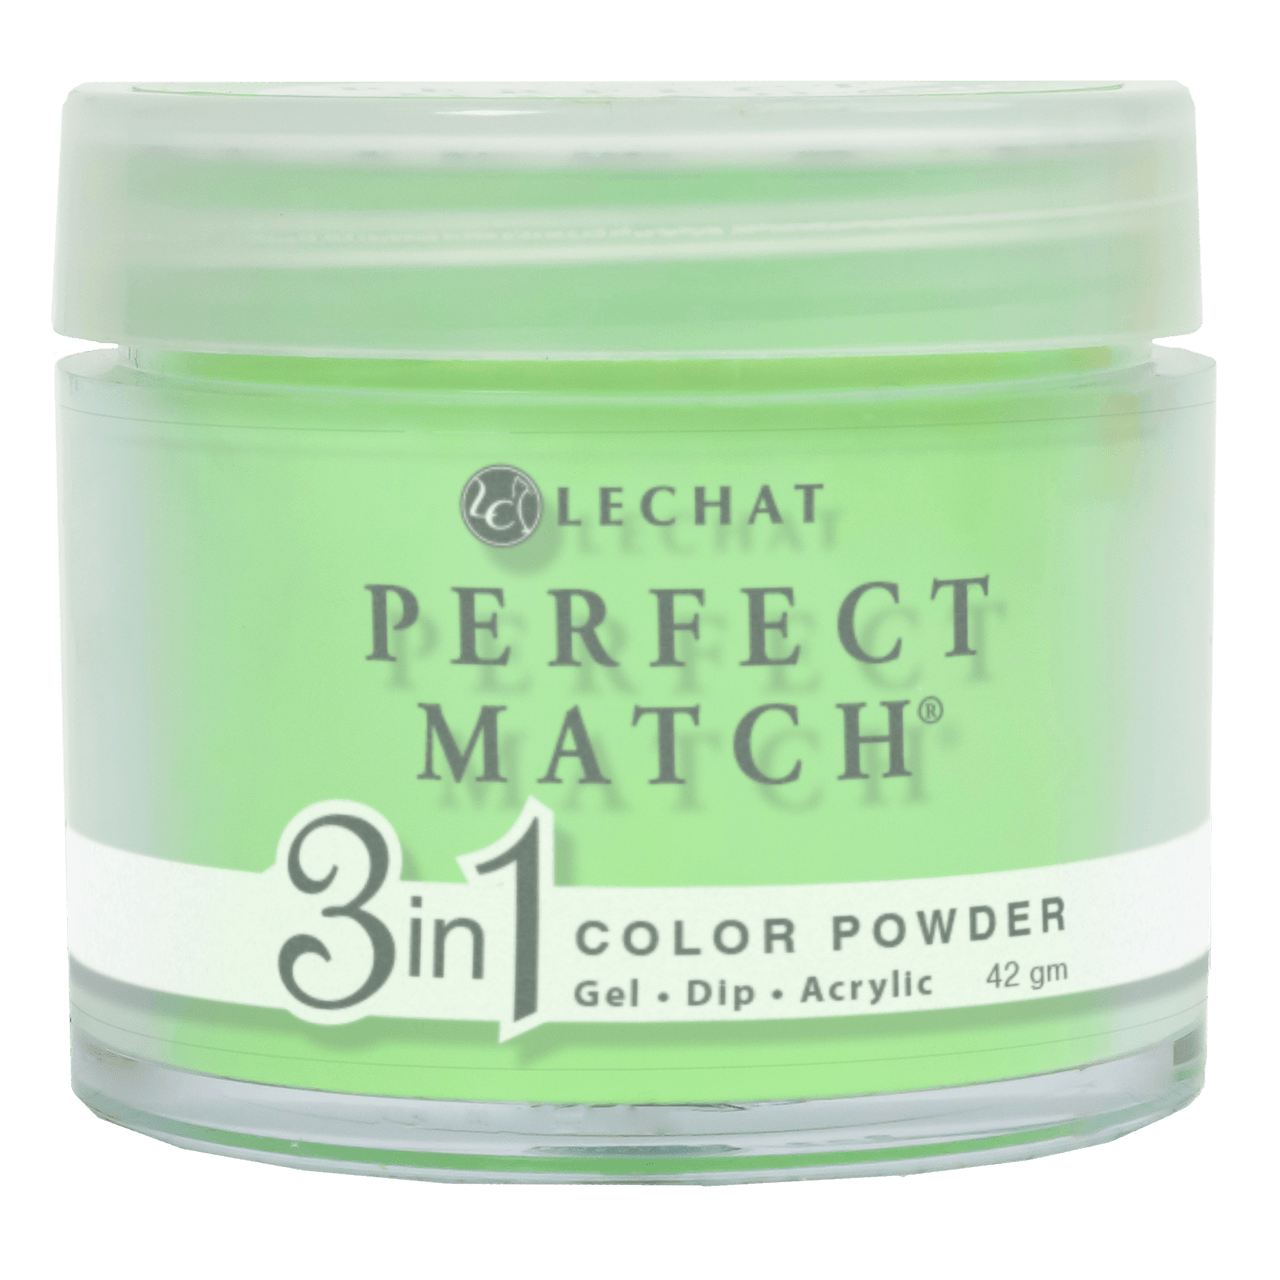 LeChat Perfect Match Dip Powder - Fresh Start 0.5 oz -# PMDP032N LeChat